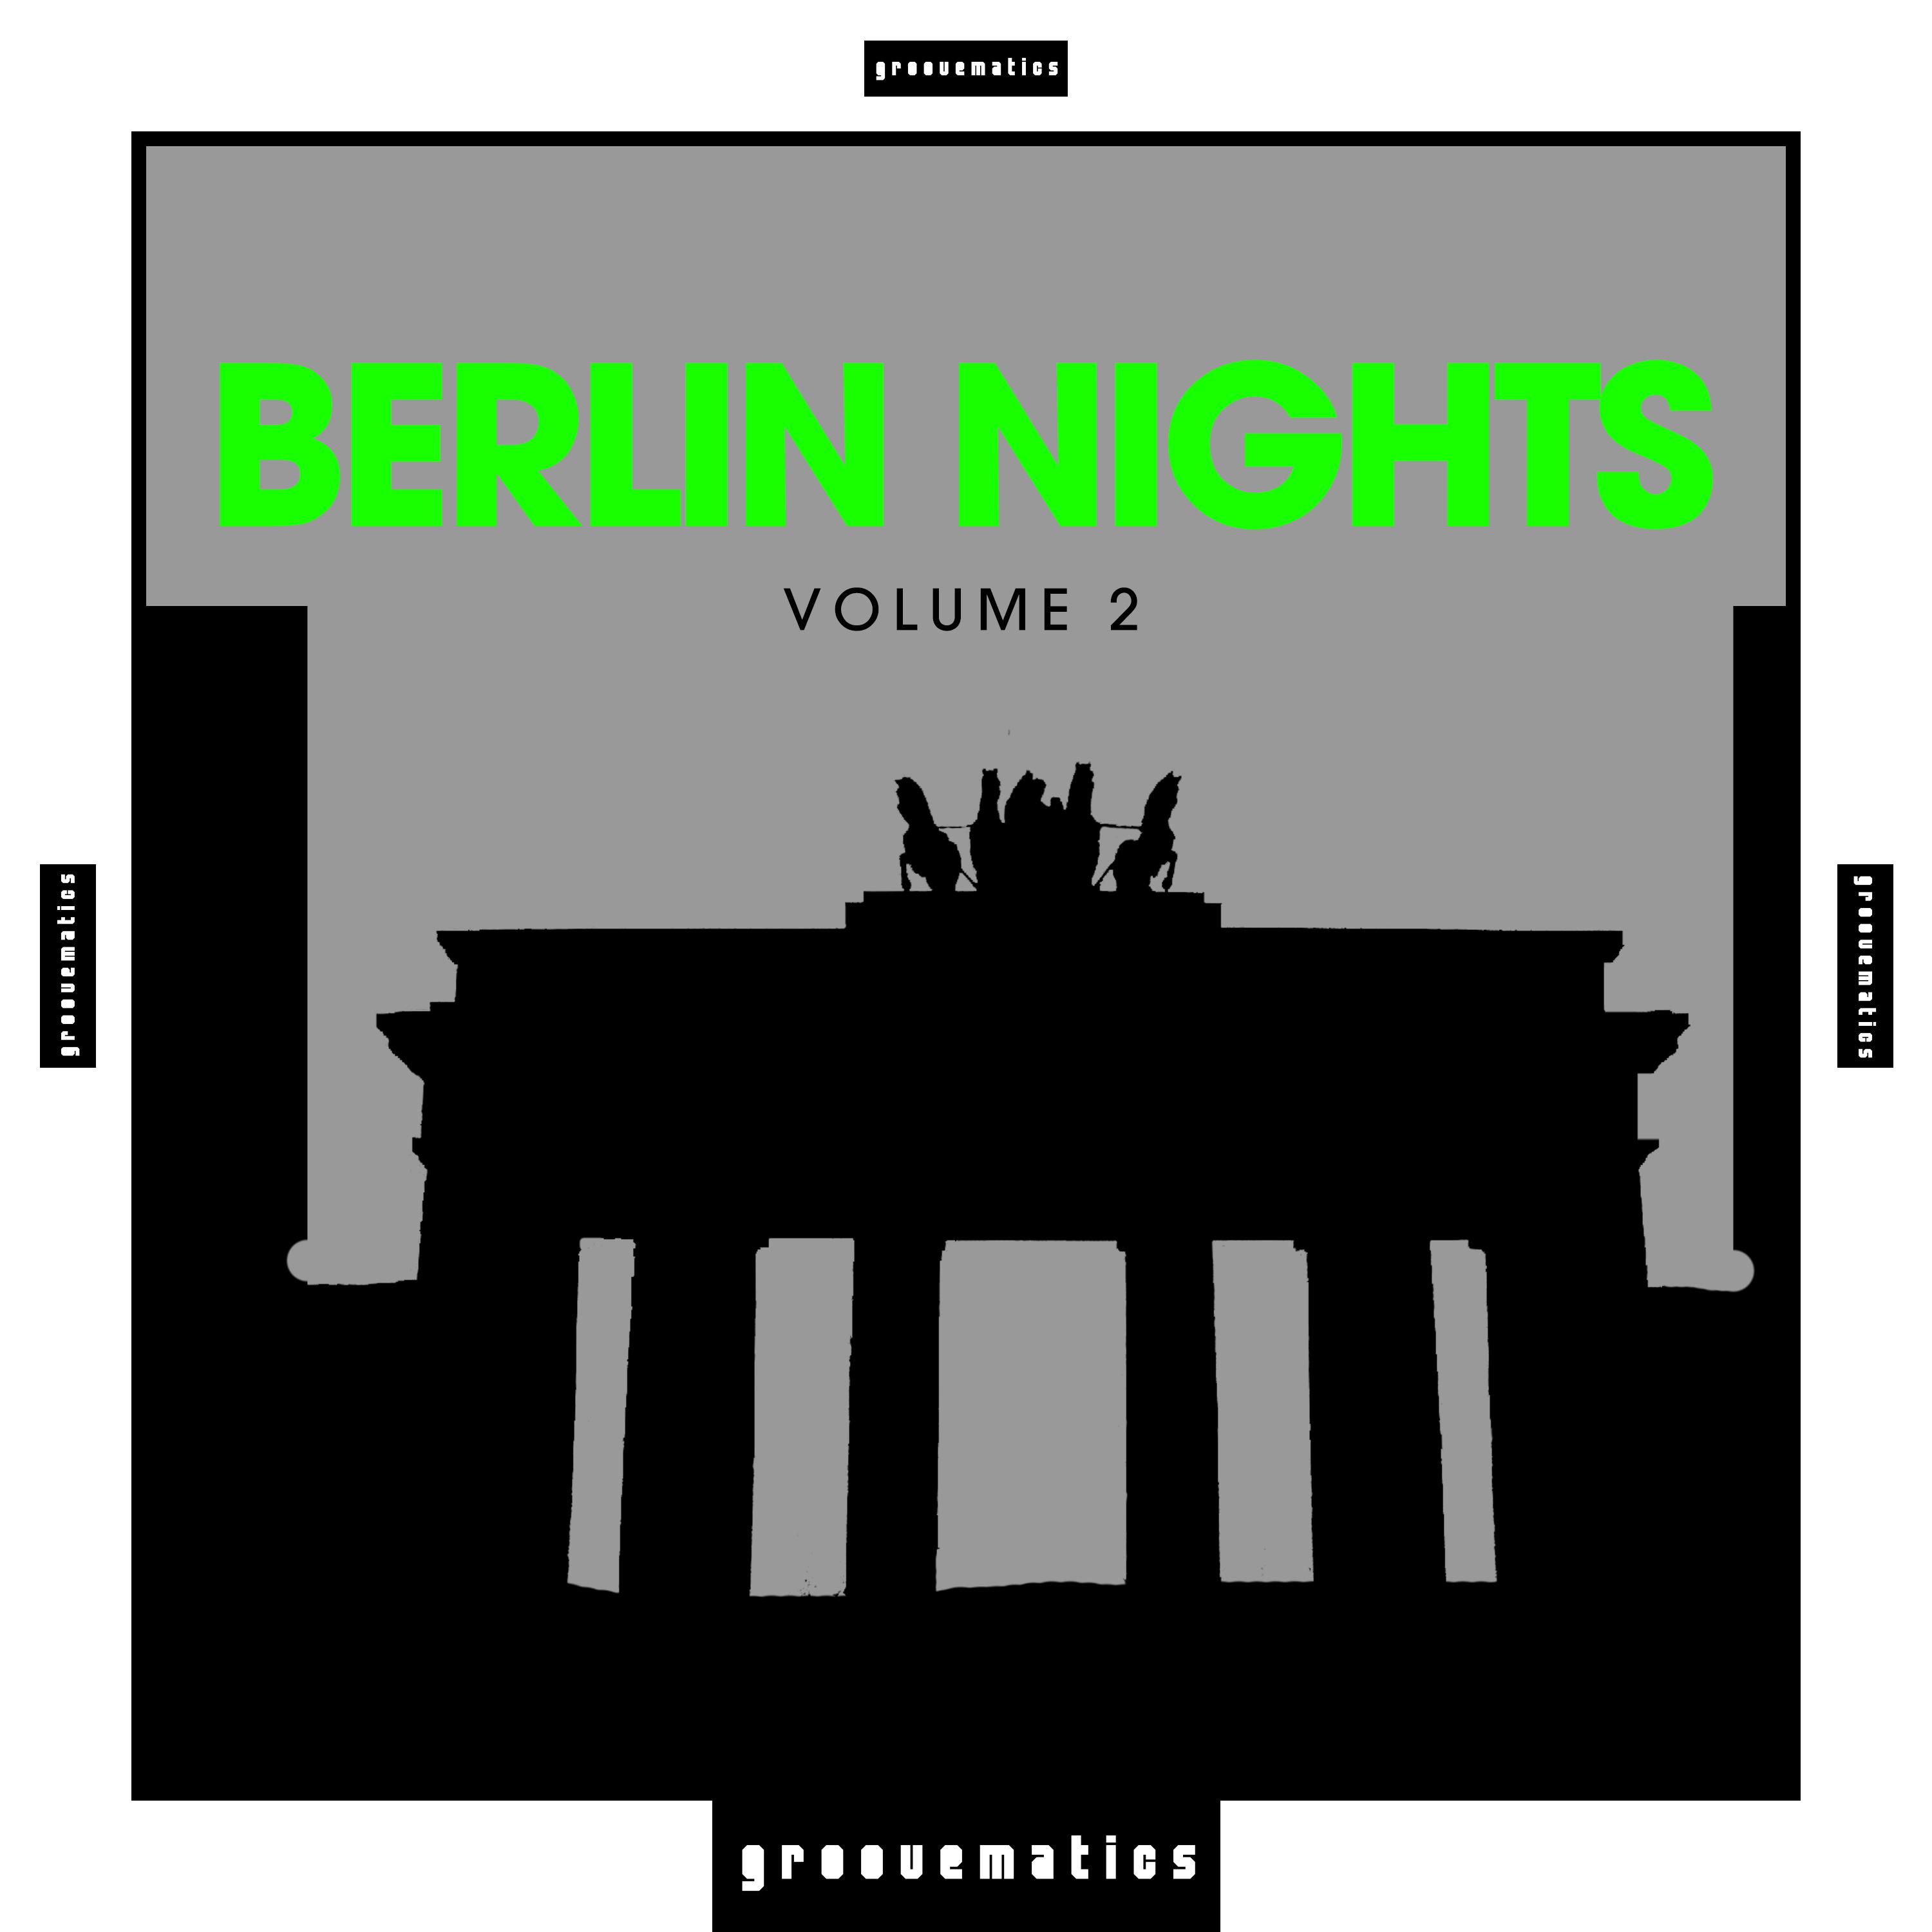 Berlin Nights, Vol. 2